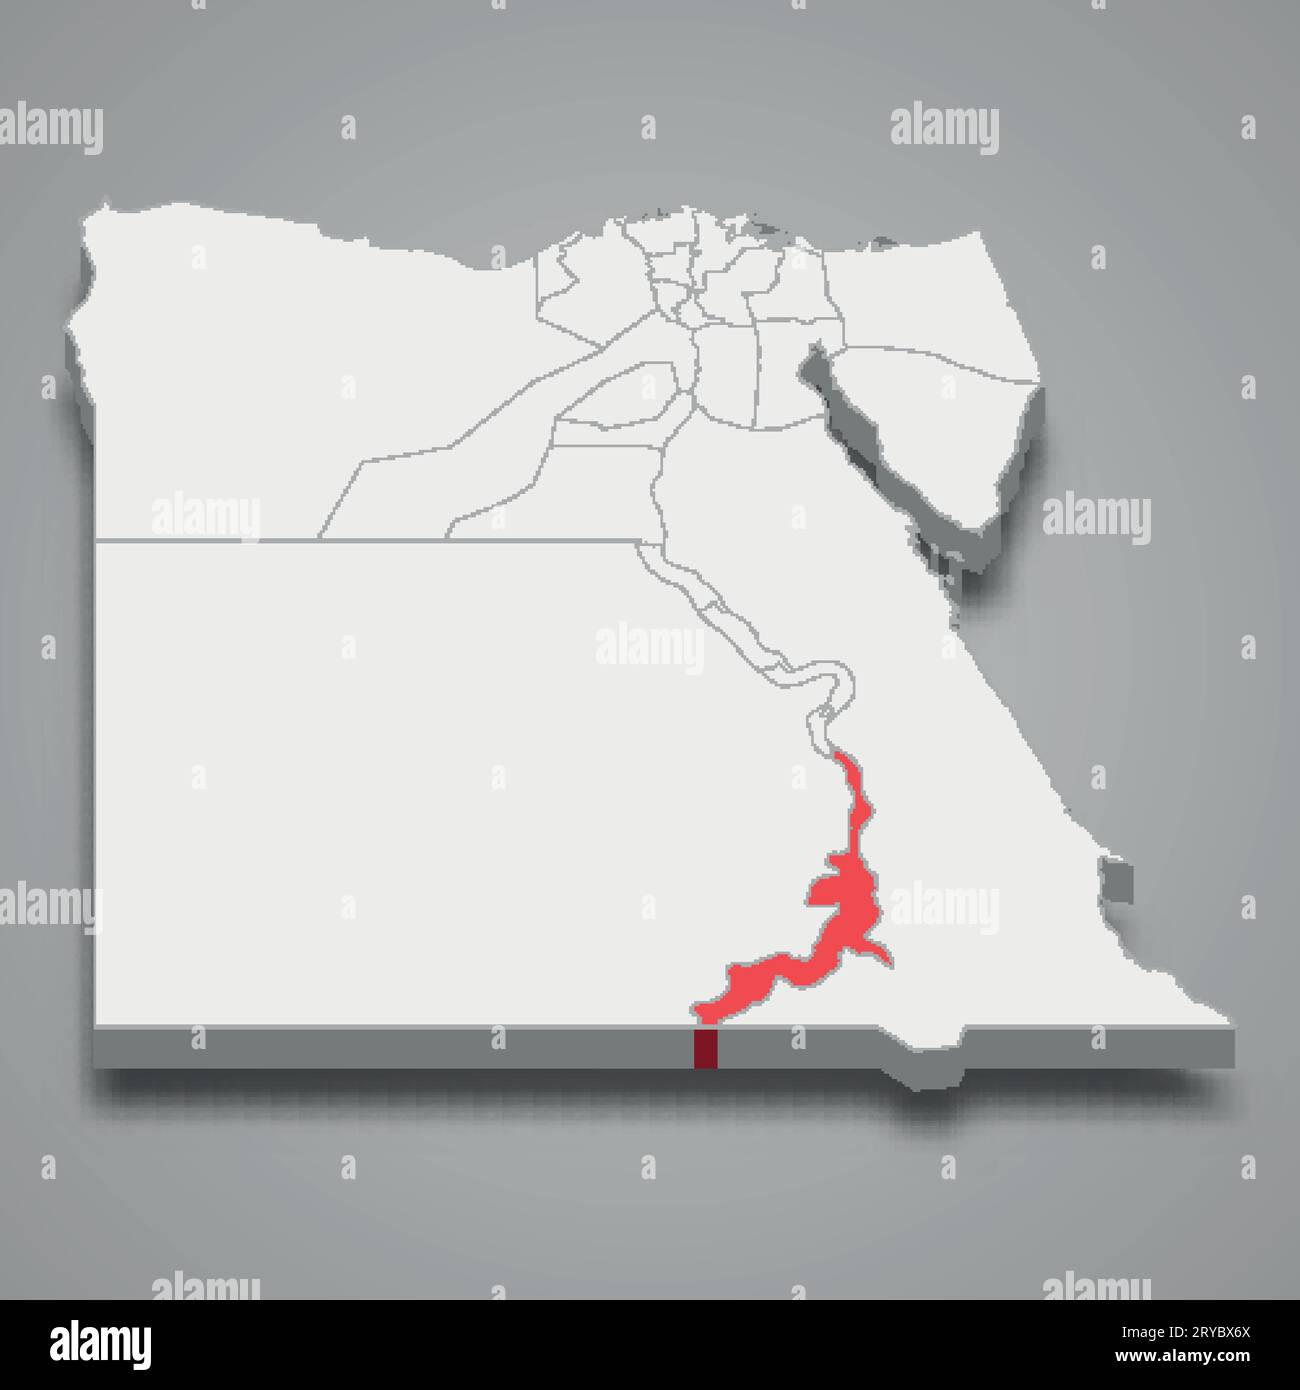 Aswan region location within Egypt 3d isometric map Stock Vector